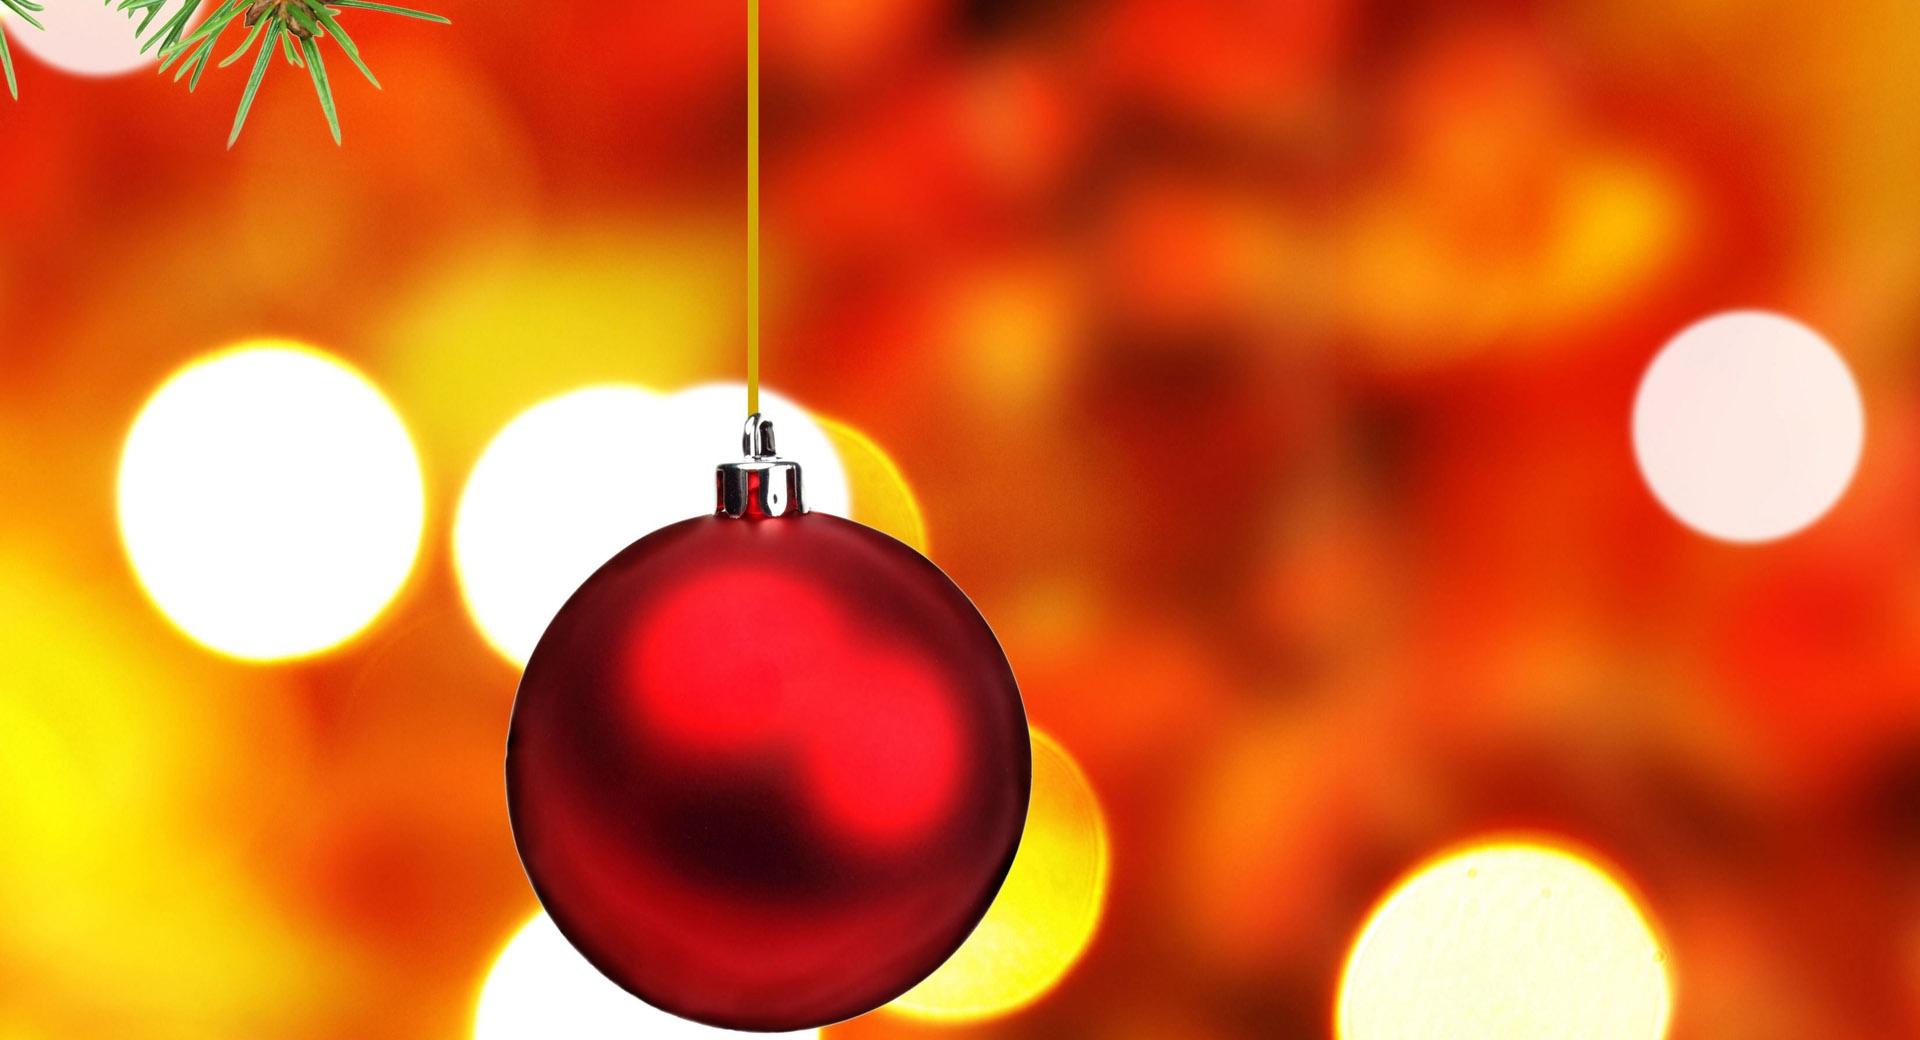 Christmas Tree Ball at 1024 x 1024 iPad size wallpapers HD quality